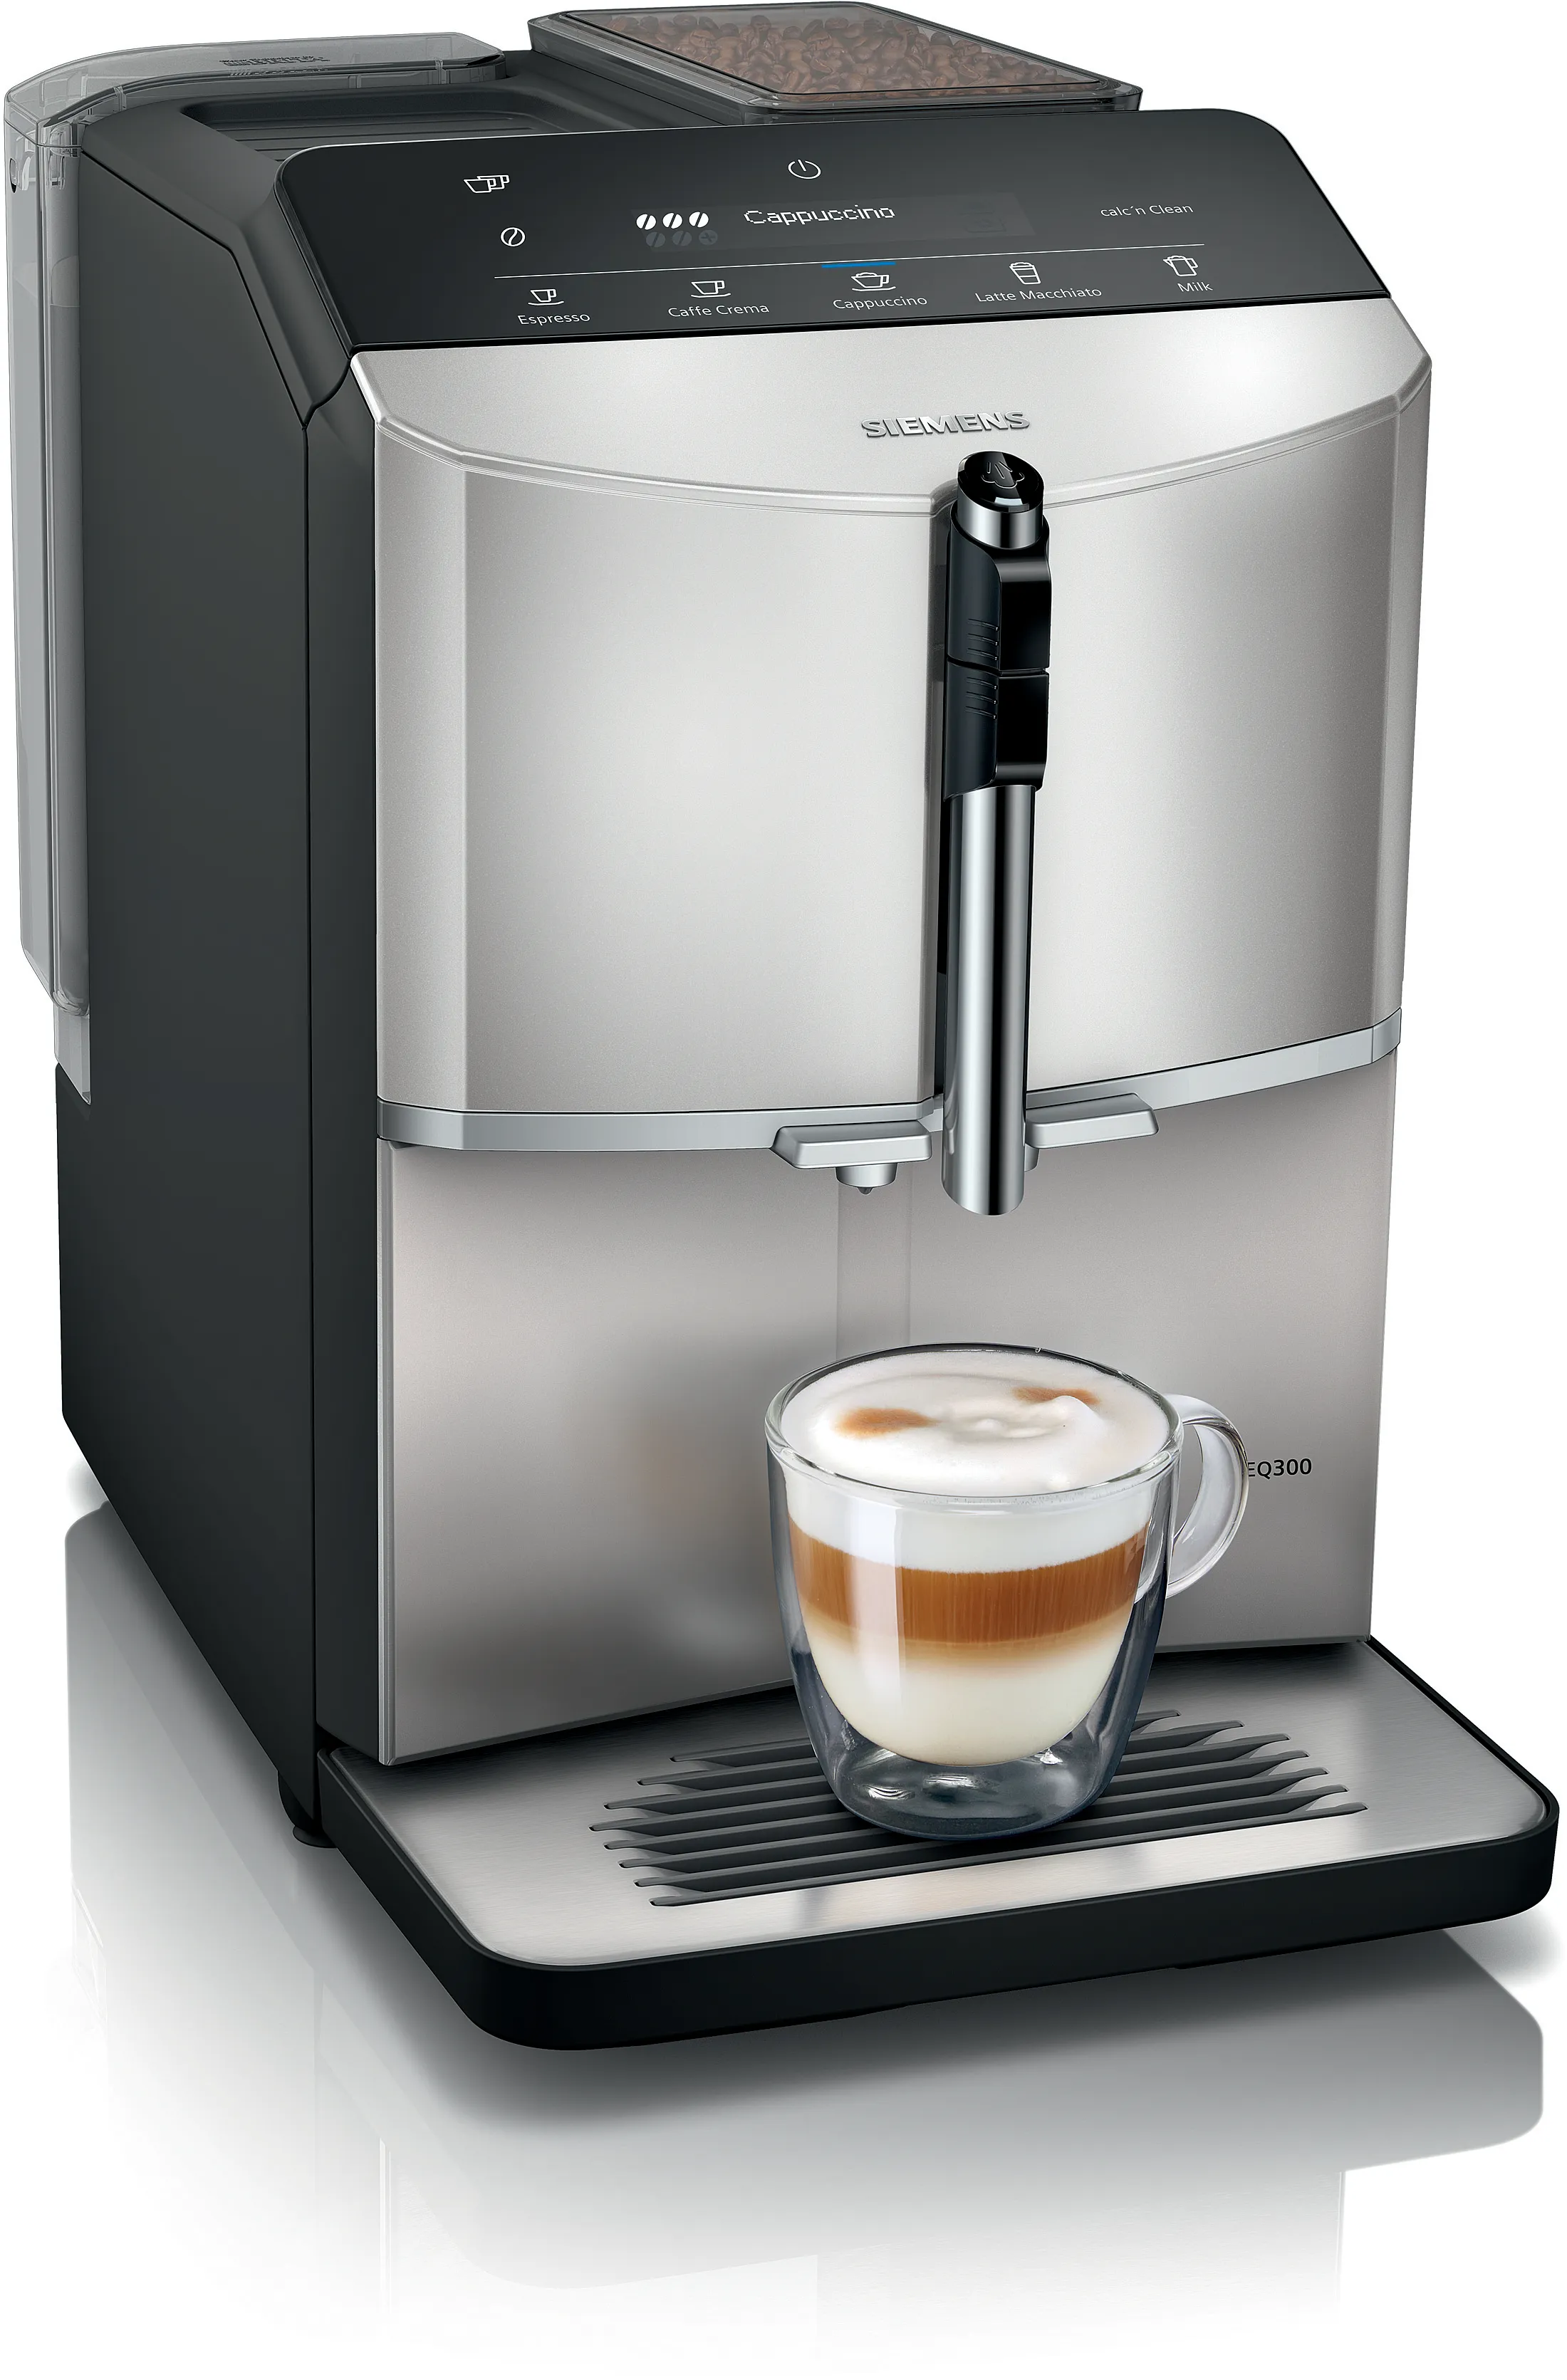 Fully automatic coffee machine EQ300 Inox silver metallic 